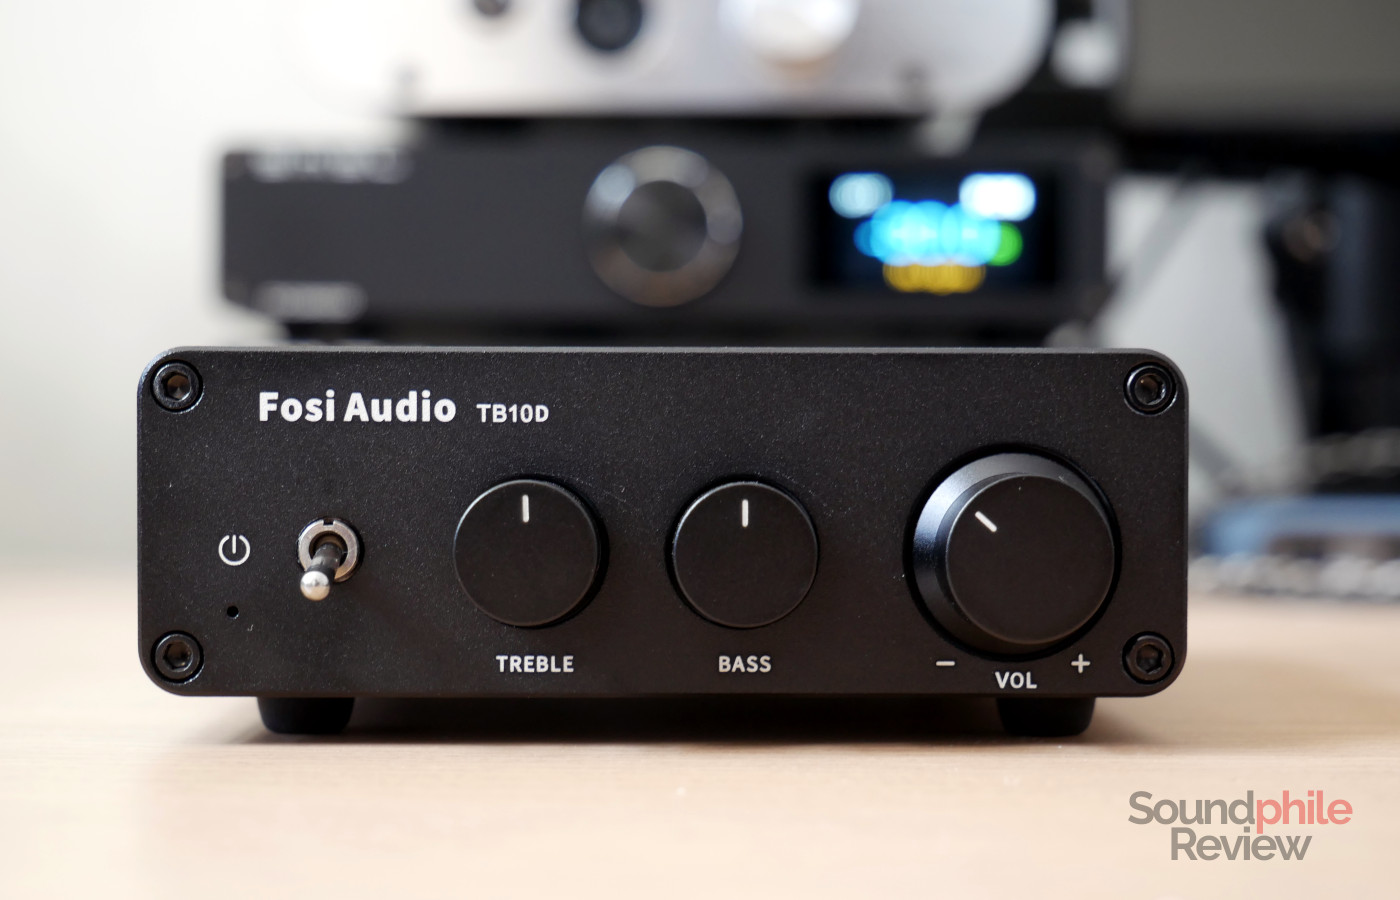 Fosi Audio TB10D review: positively deceptive - Soundphile Review